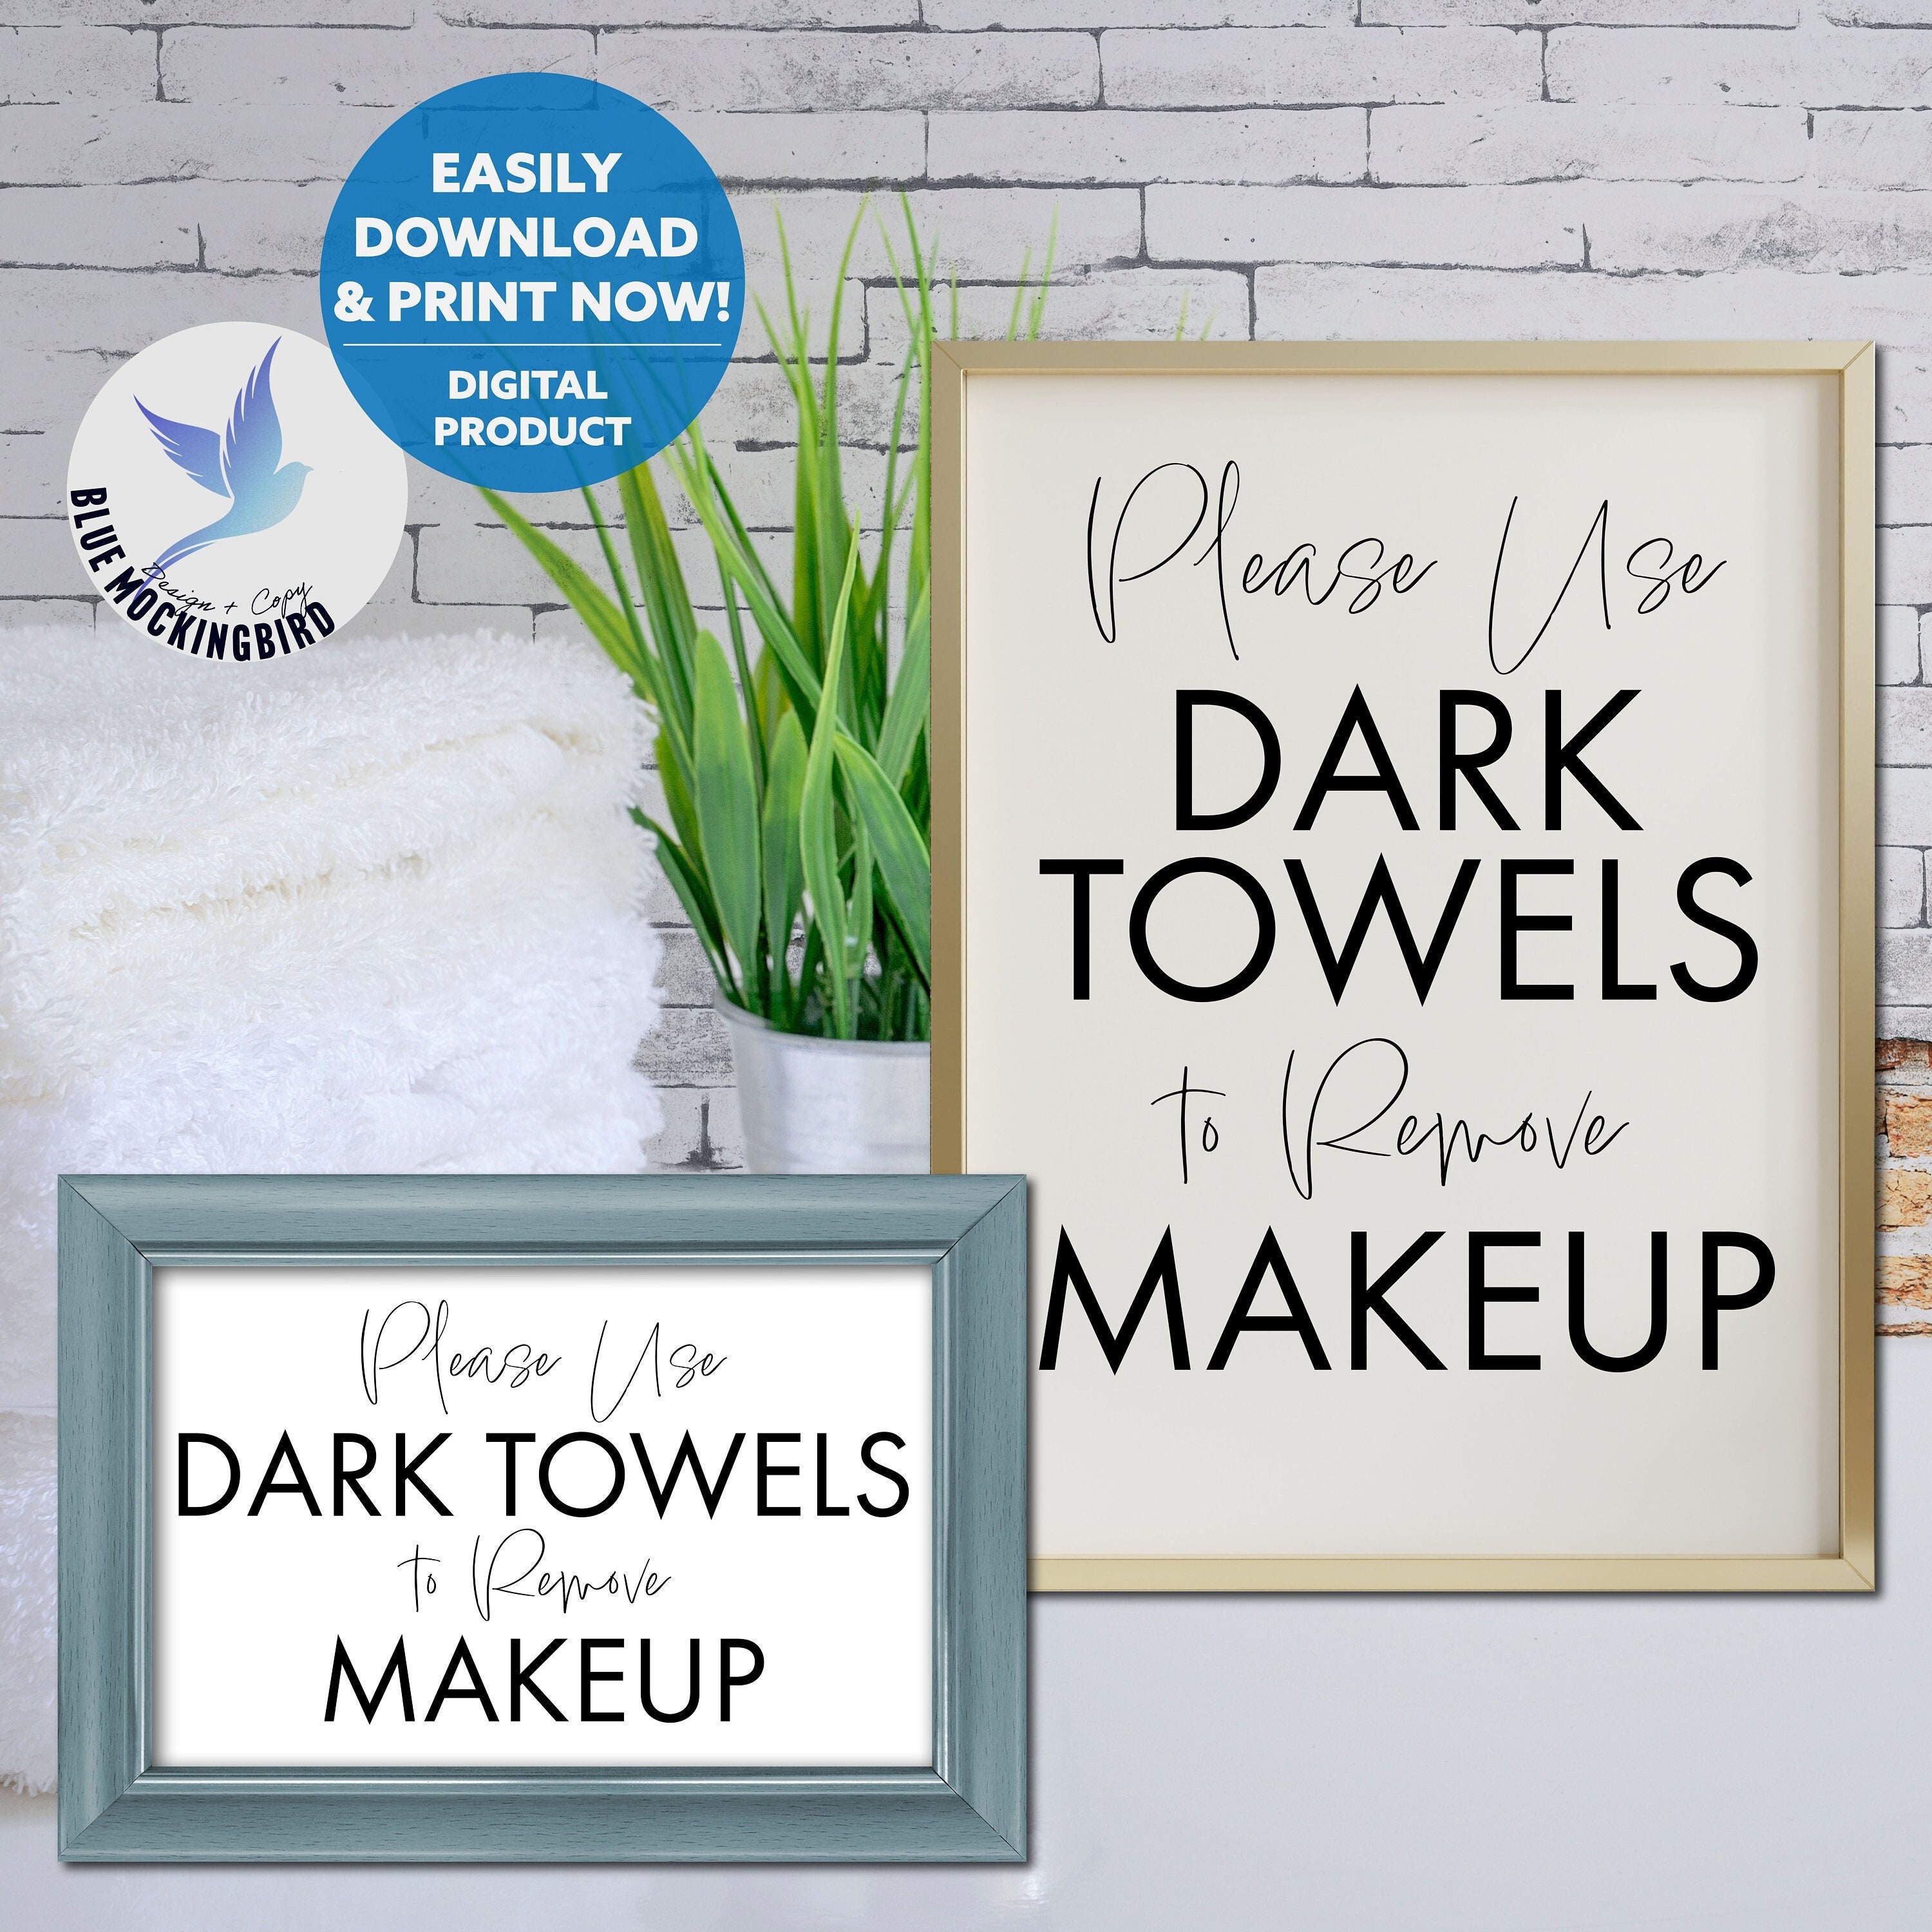 Black Make Up Washcloths Set – The Pillow Bar